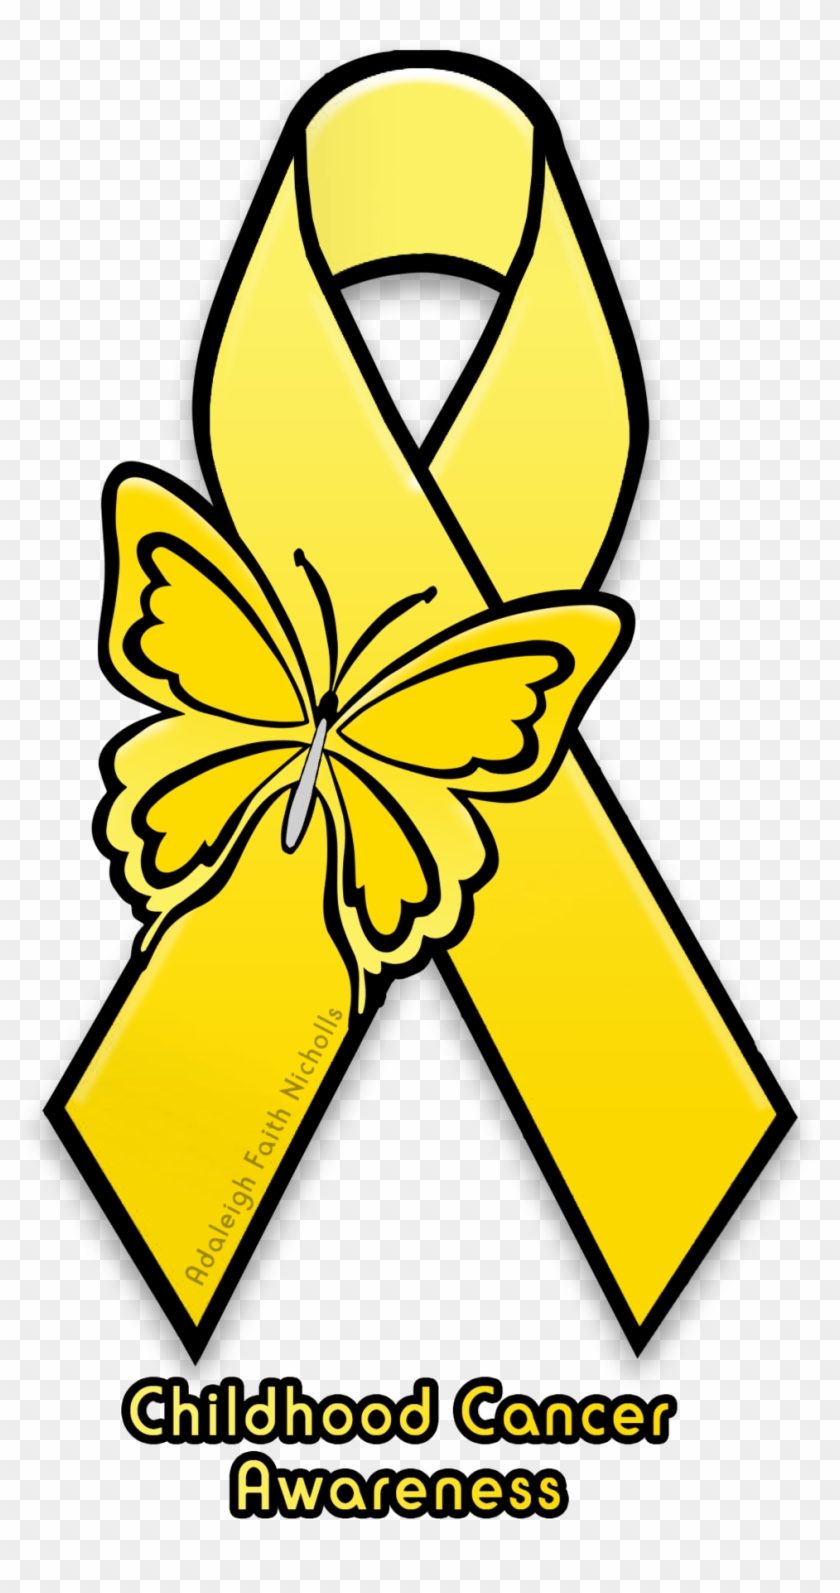 Adaleighfaith 8 2 Childhood Cancer Awareness Ribbon - Childhood Cancer Awareness Ribbon Clipart